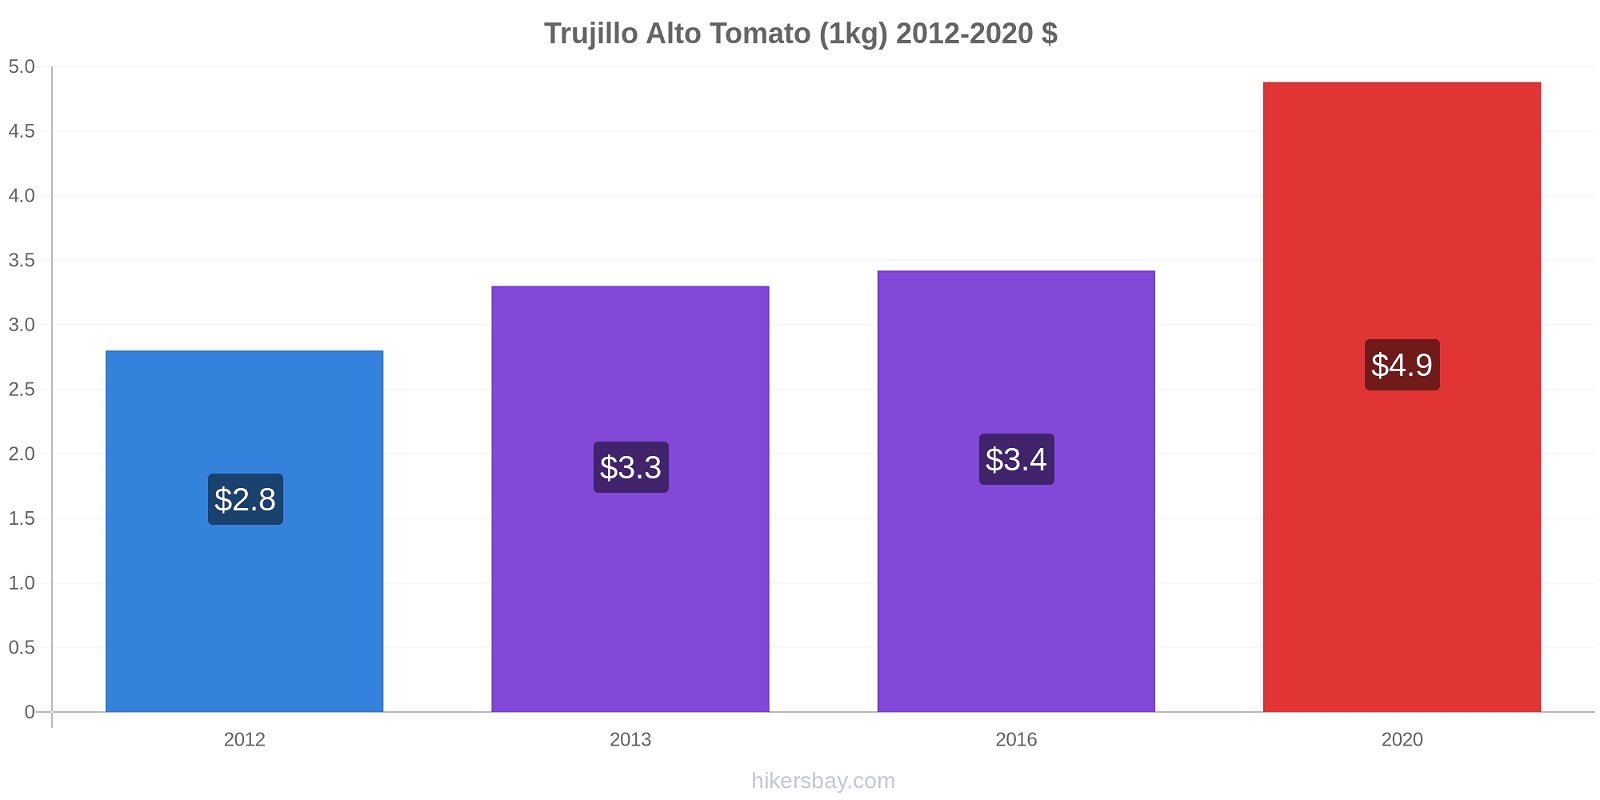 Trujillo Alto price changes Tomato (1kg) hikersbay.com